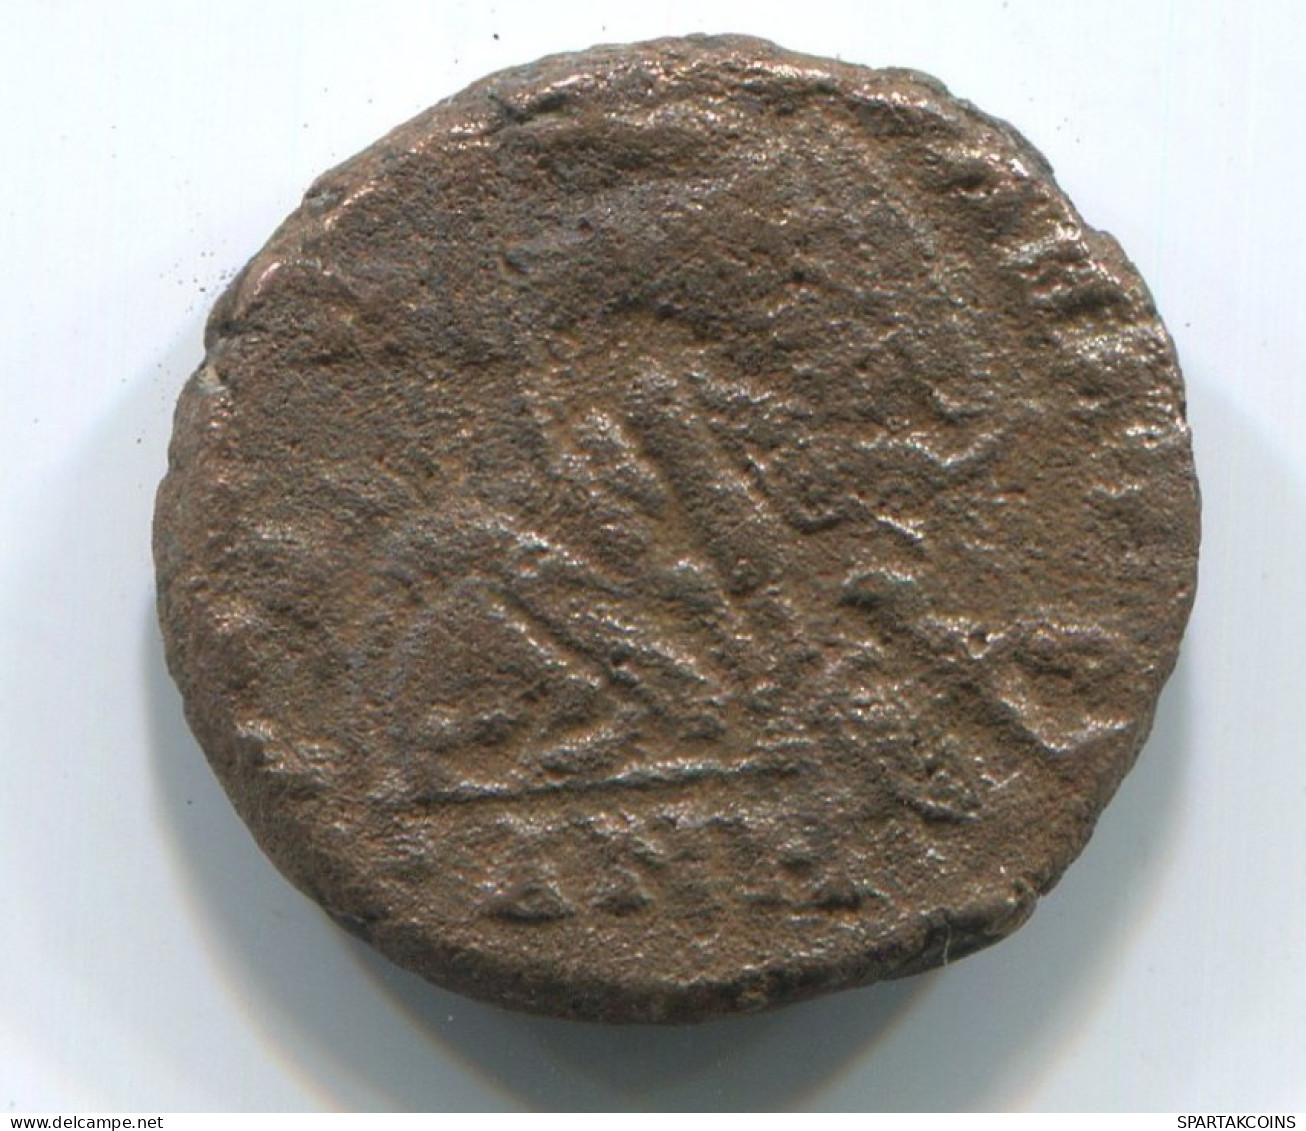 LATE ROMAN EMPIRE Pièce Antique Authentique Roman Pièce 2.8g/16mm #ANT2289.14.F.A - The End Of Empire (363 AD Tot 476 AD)